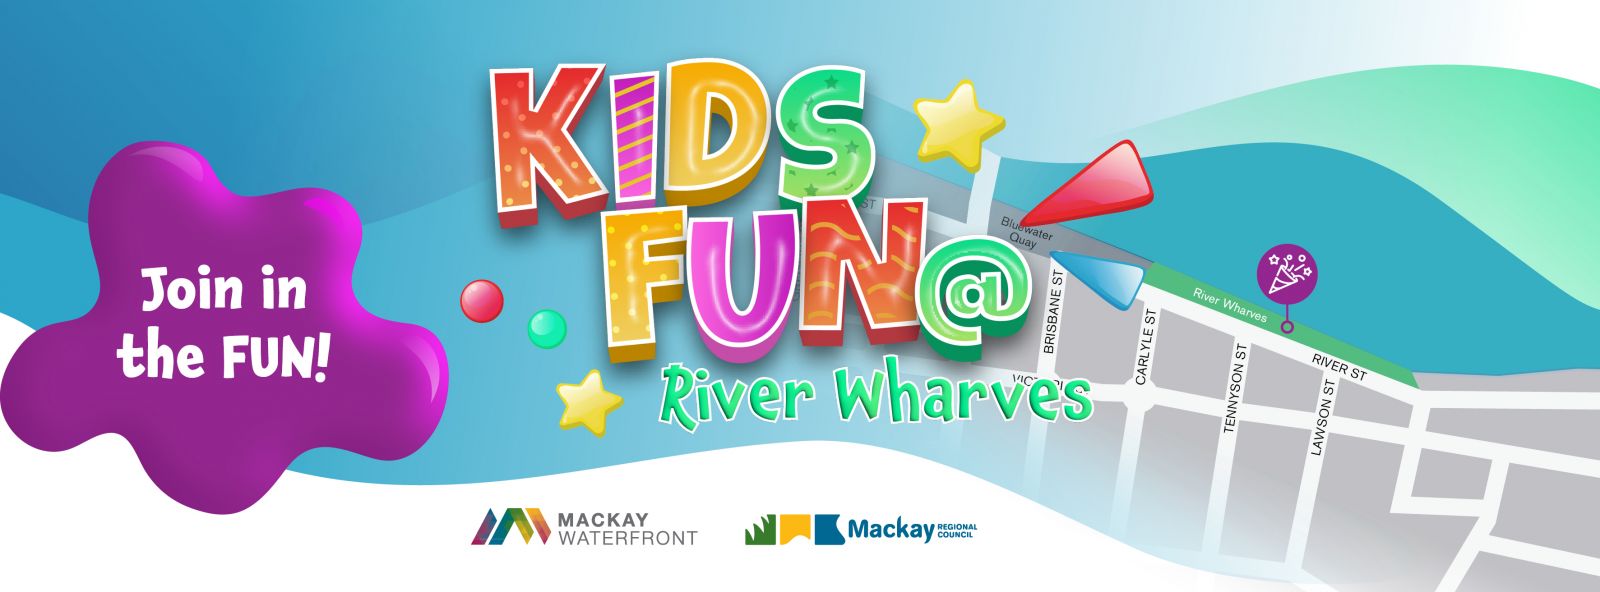 Kids Fun at River Wharves banner image